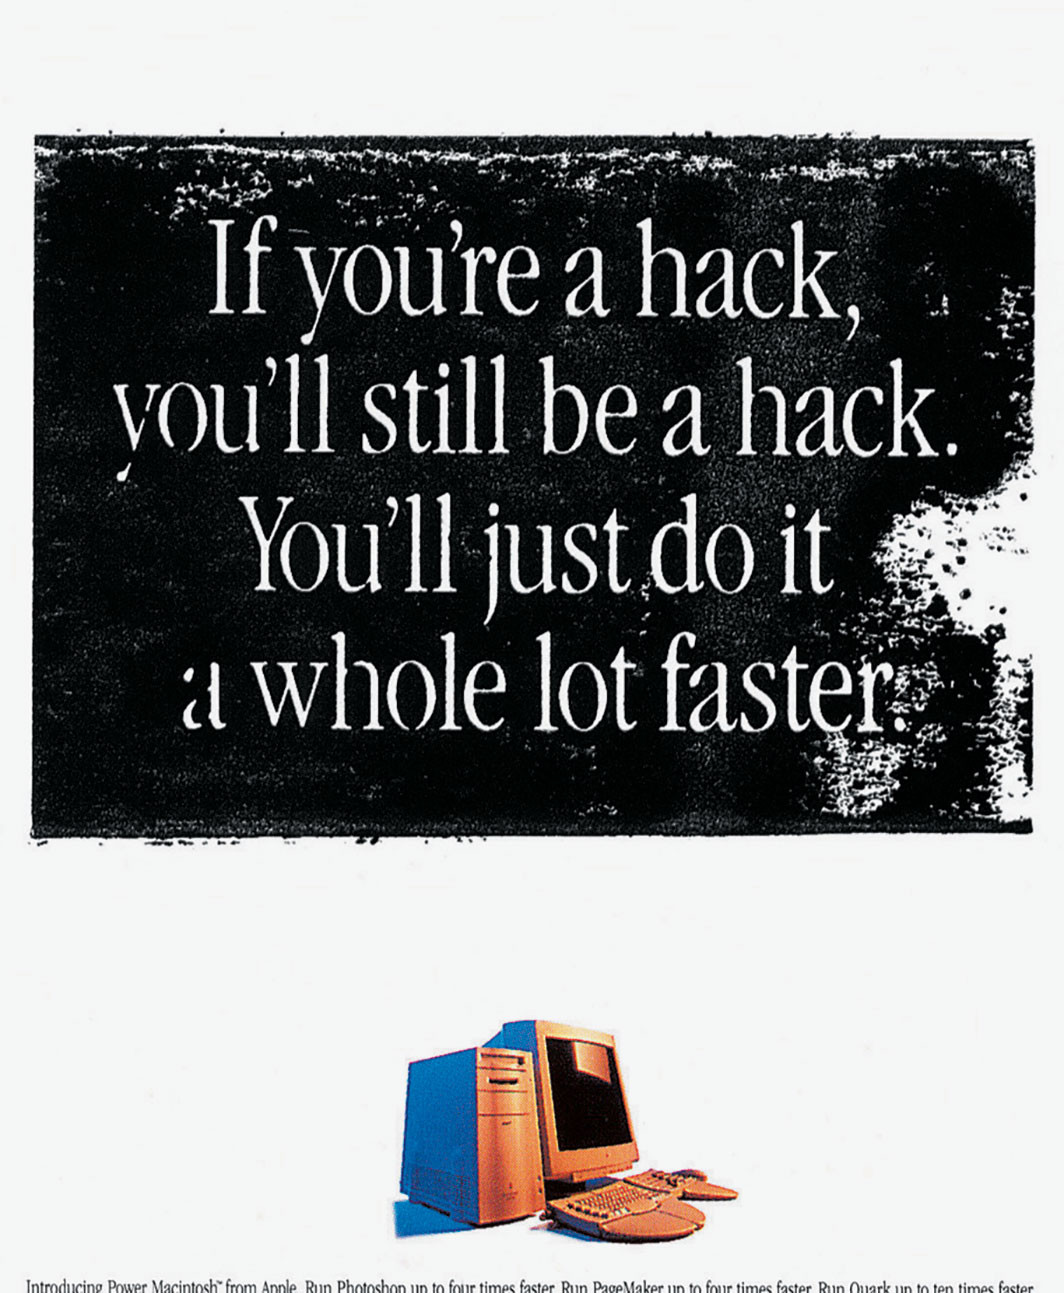 Apple Power Macintosh advertisement, 1994.